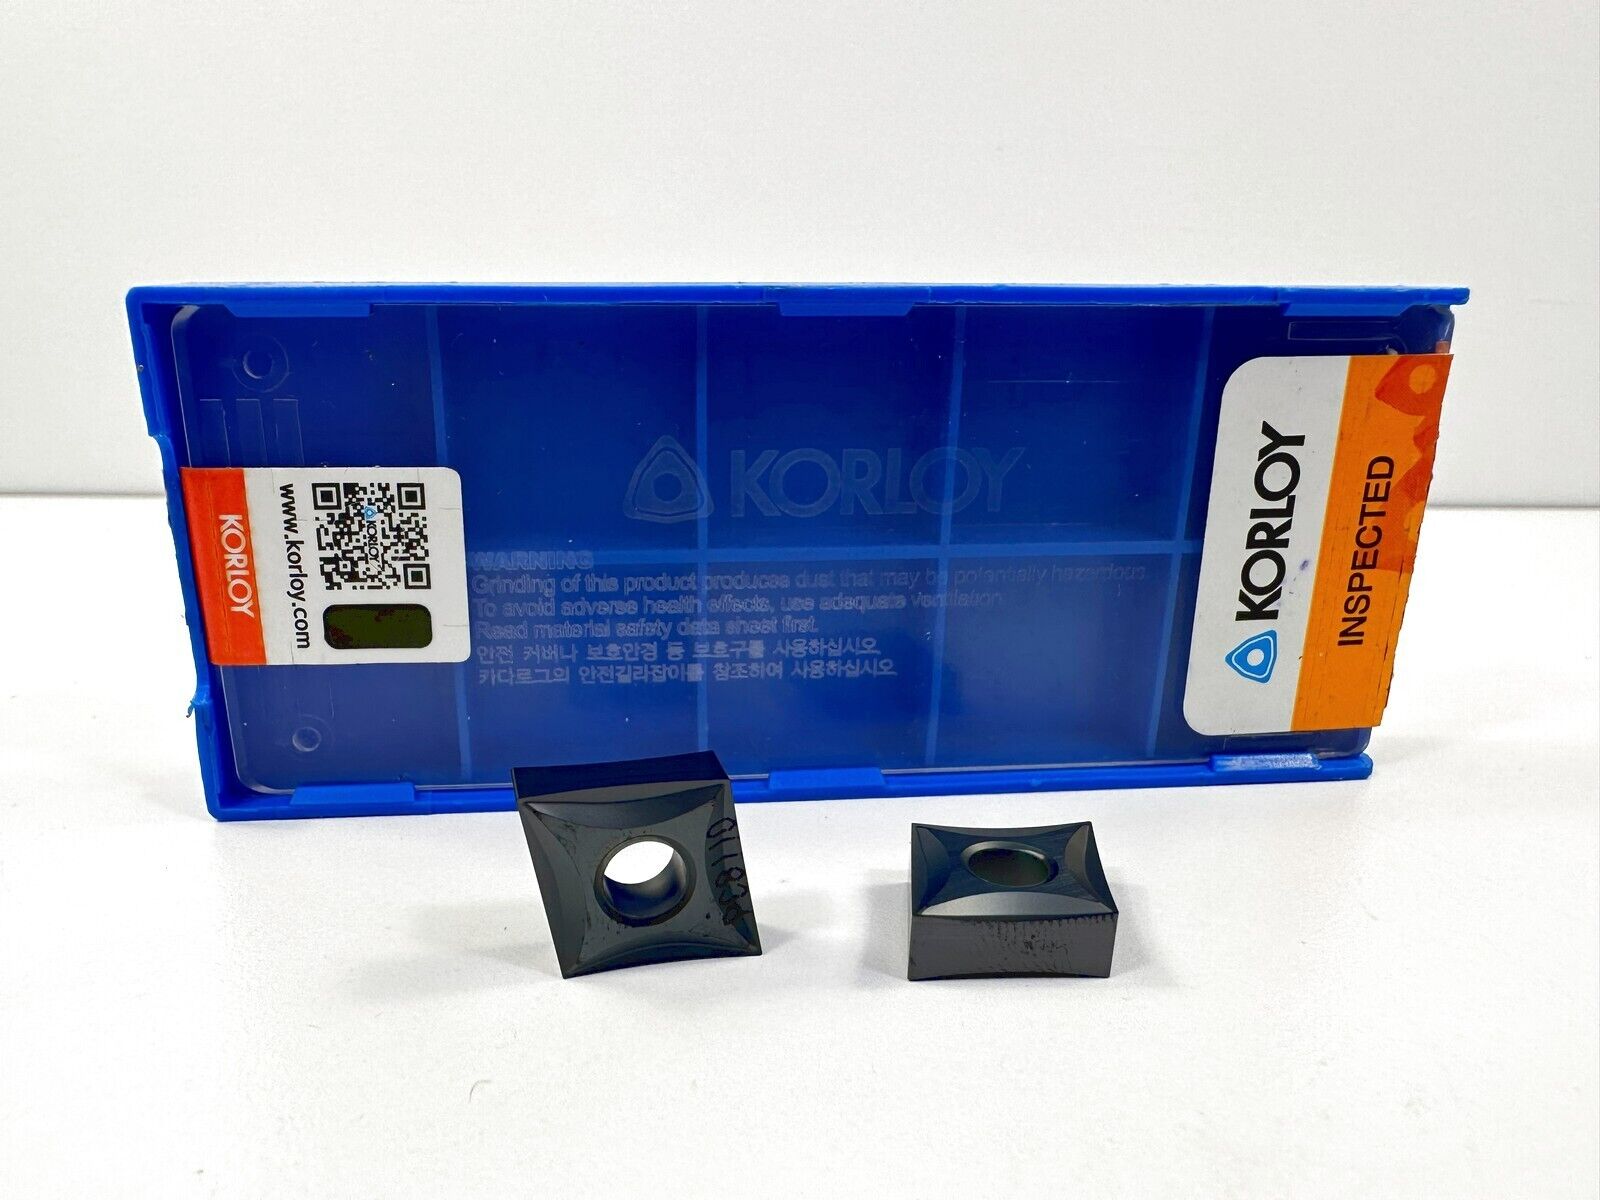 KOLROY CNGG430.5-VP1 CNGG120402-VP1 | New Carbide Inserts | Grade PC8110 | 2pcs